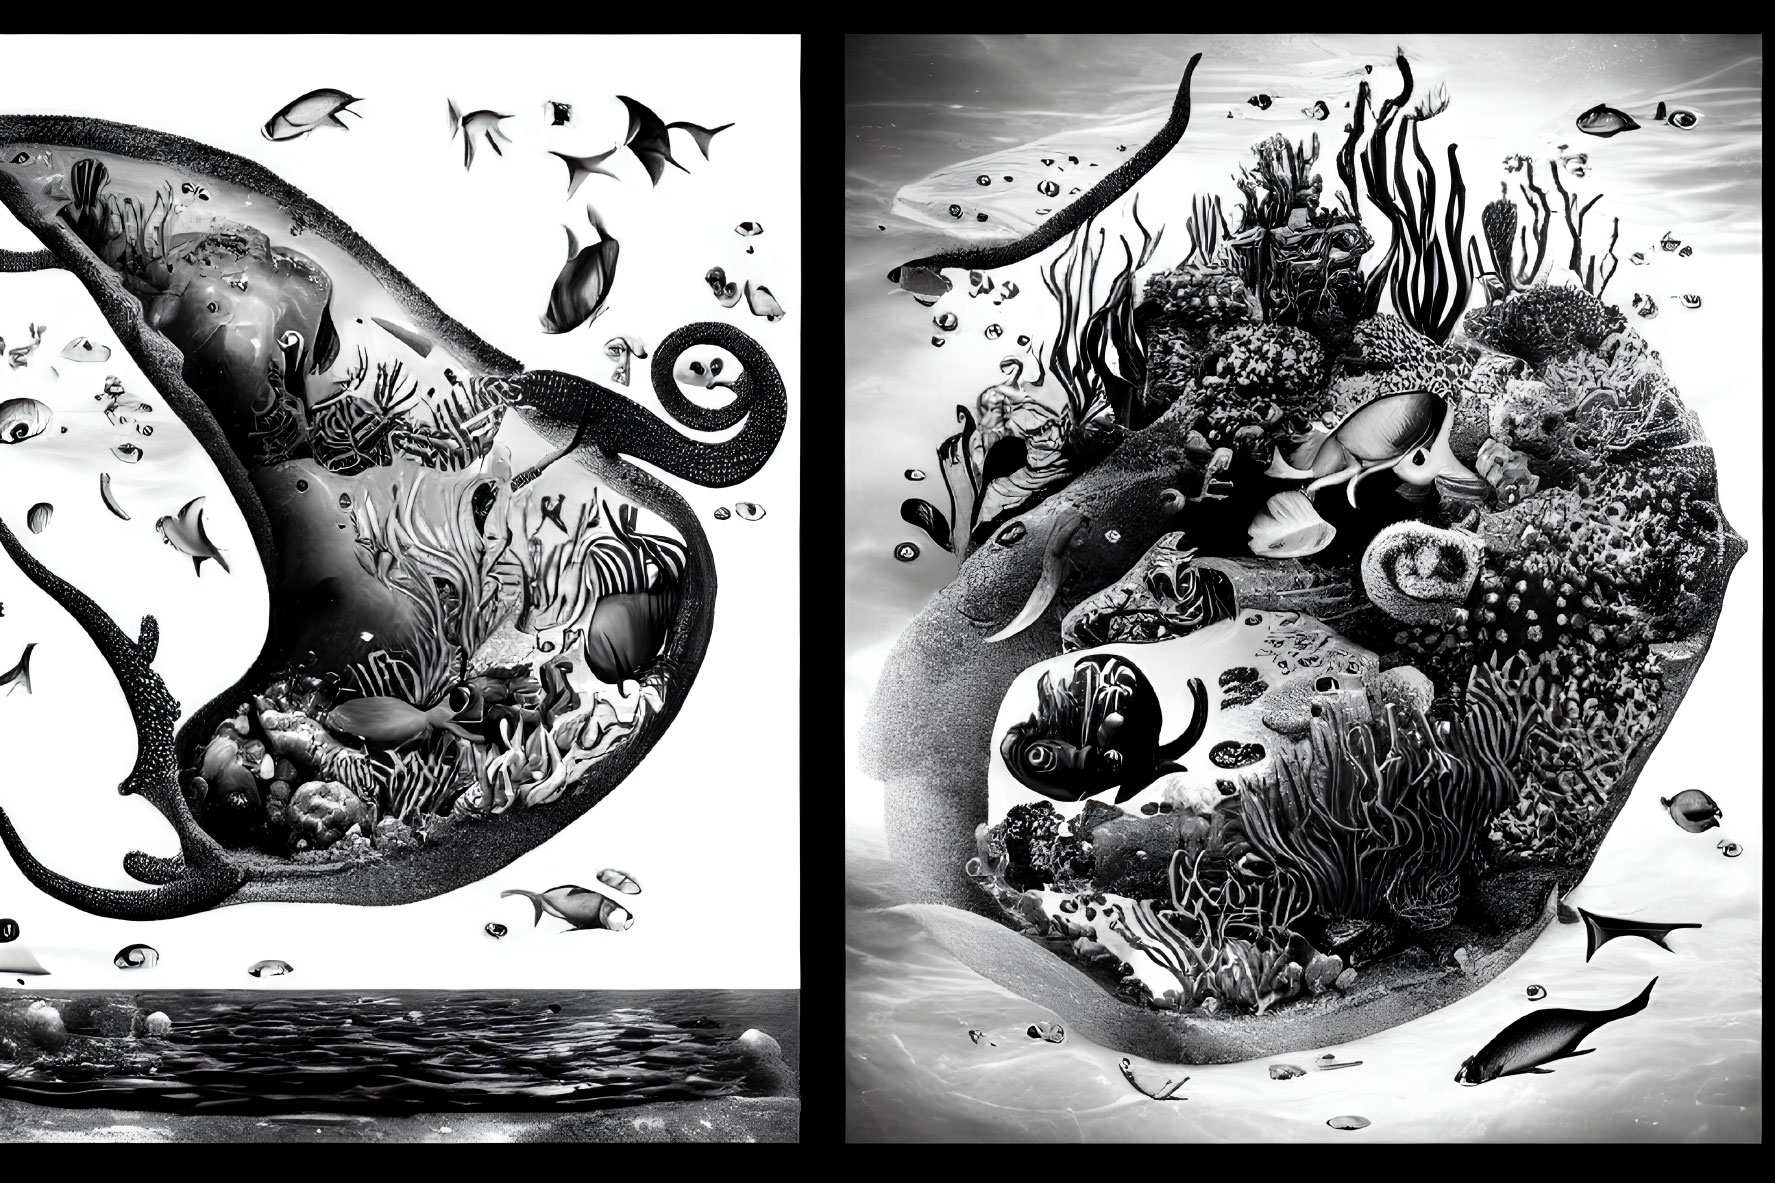 Monochrome yin-yang illustration with sea life depicting balanced underwater ecosystem.